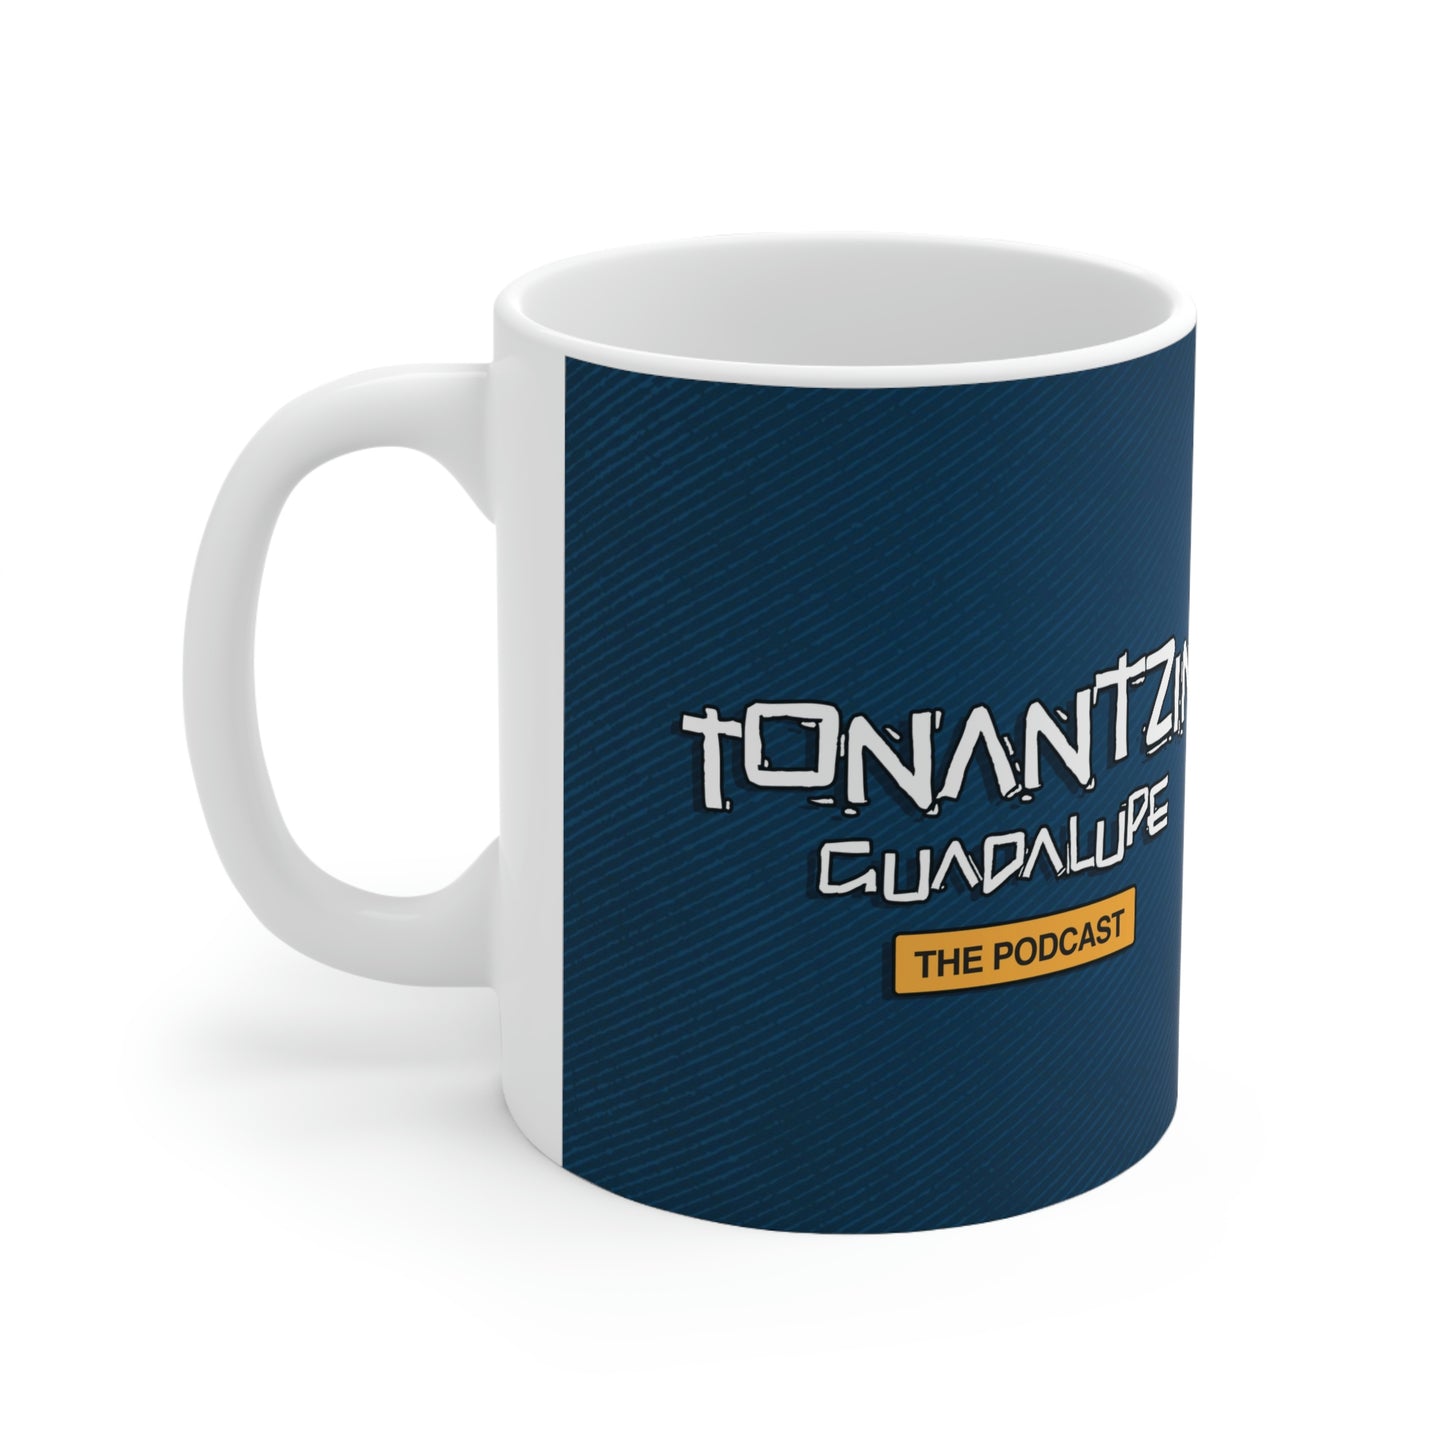 "Tonantzin Guadalupe the podcast" mug